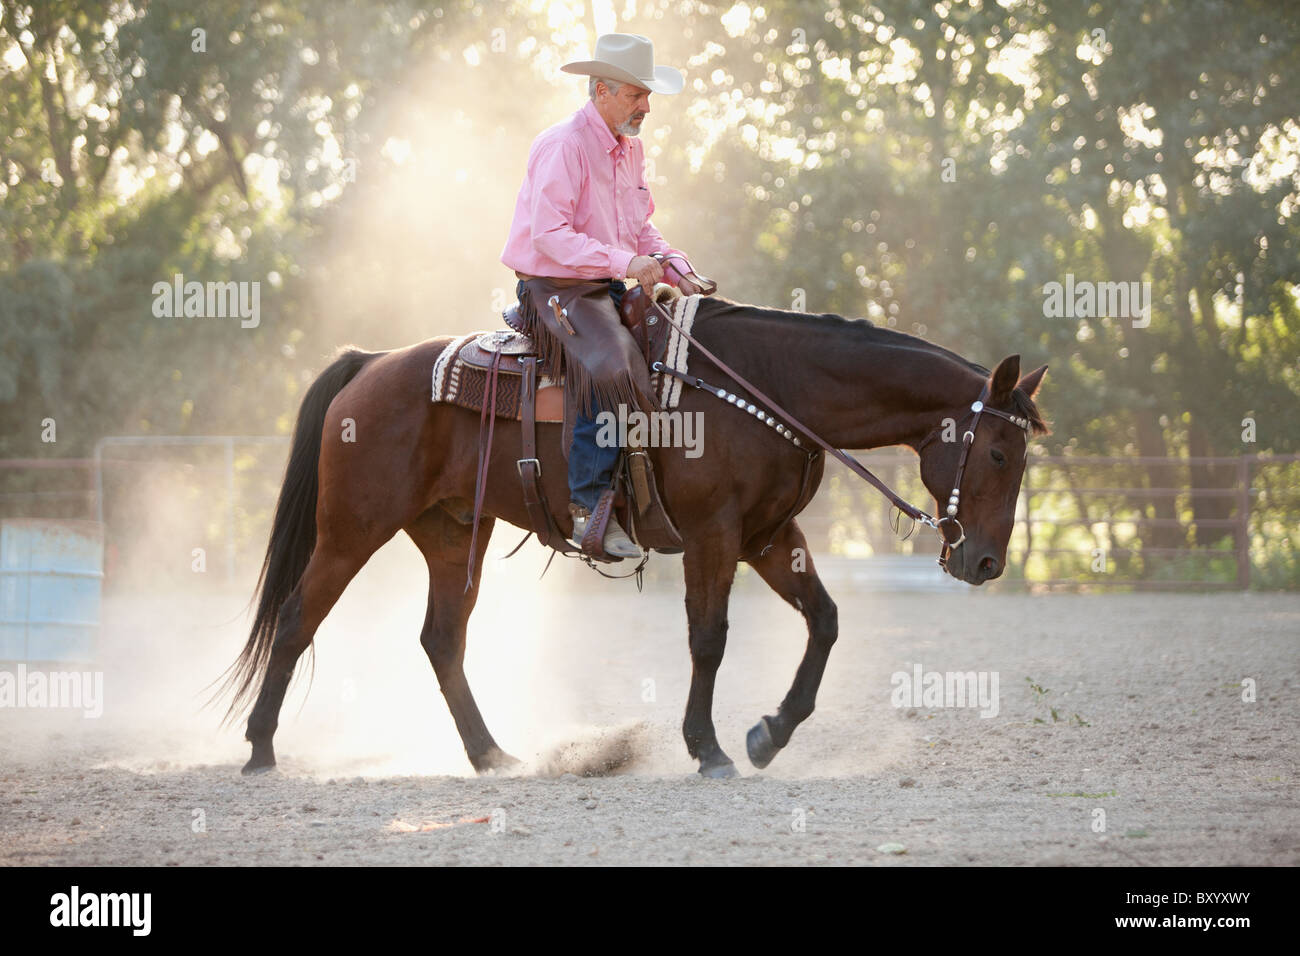 Senior man horseback riding in ranch Stock Photo